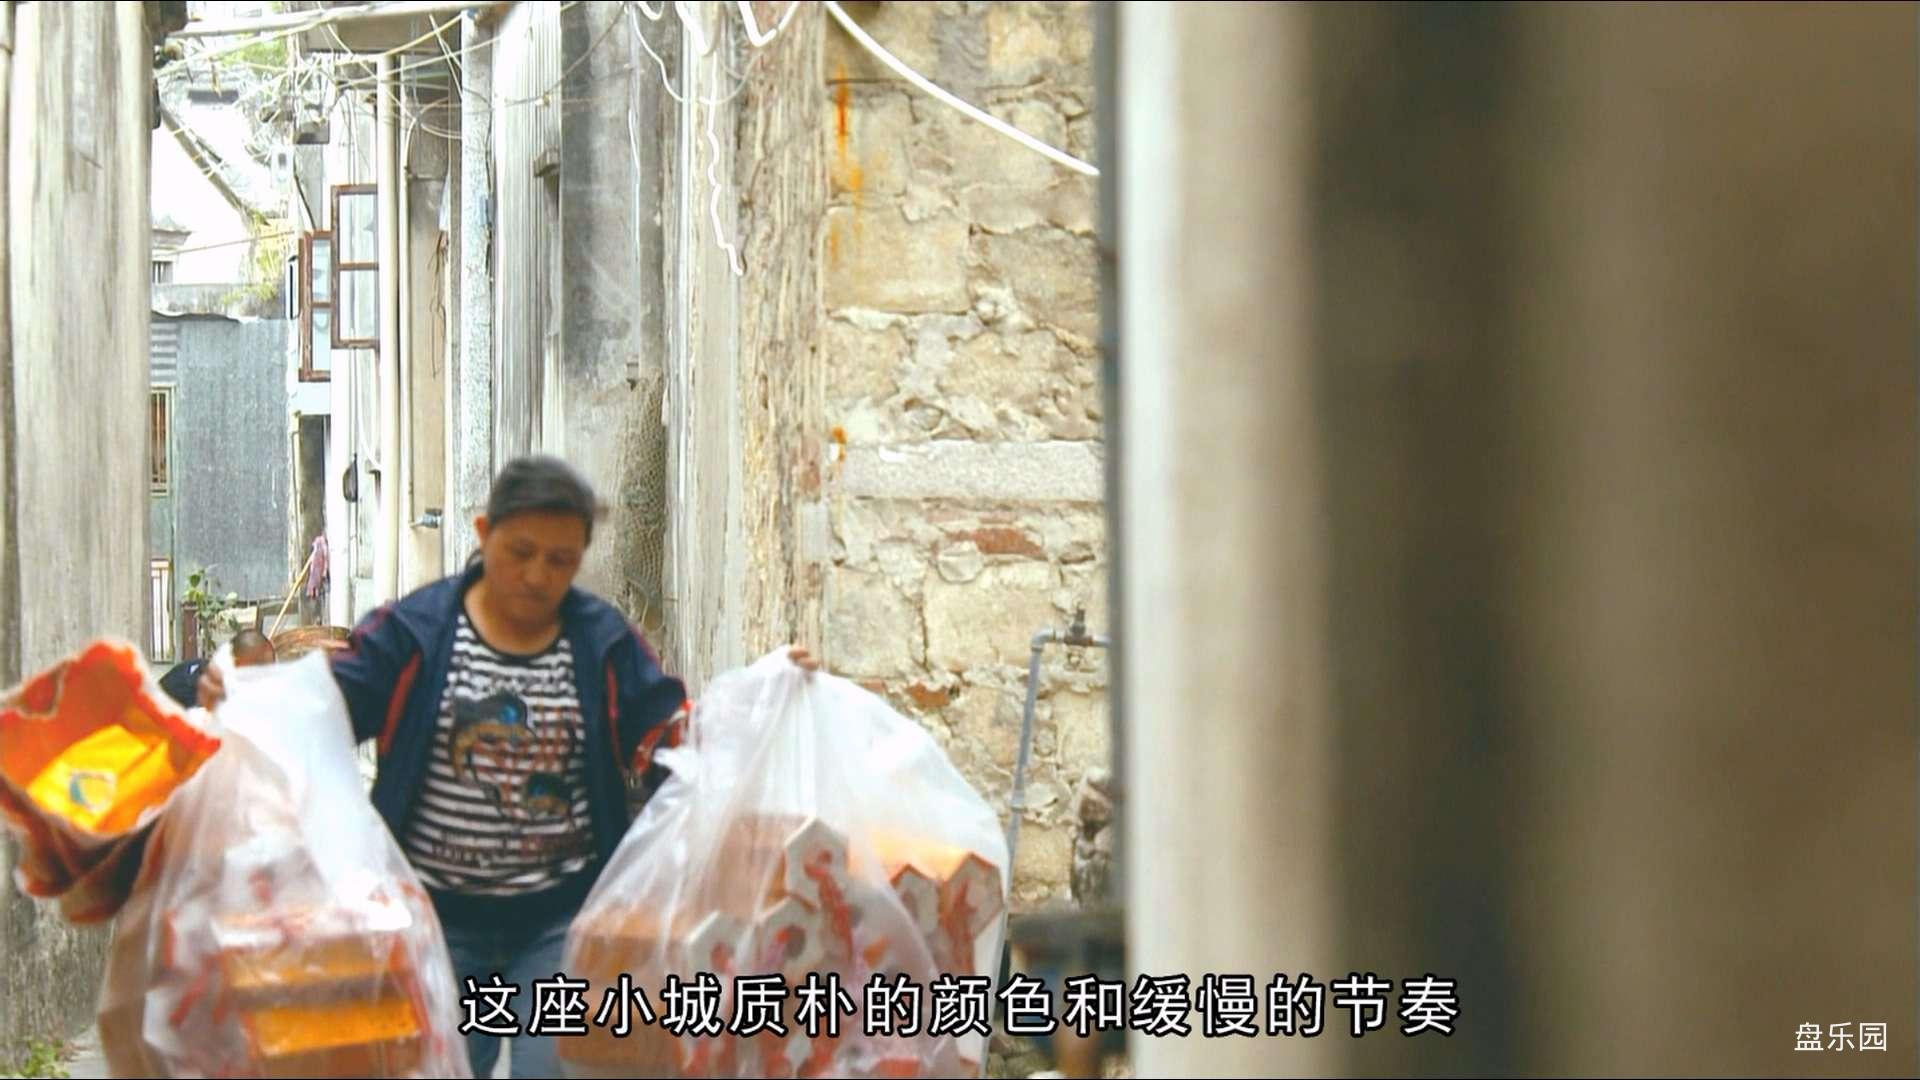 A.Bite.of.China.2012.S01.E06.1080p.BluRay.x264.AC3-HDChina.mkv.baiduyun.p.downlo.jpg